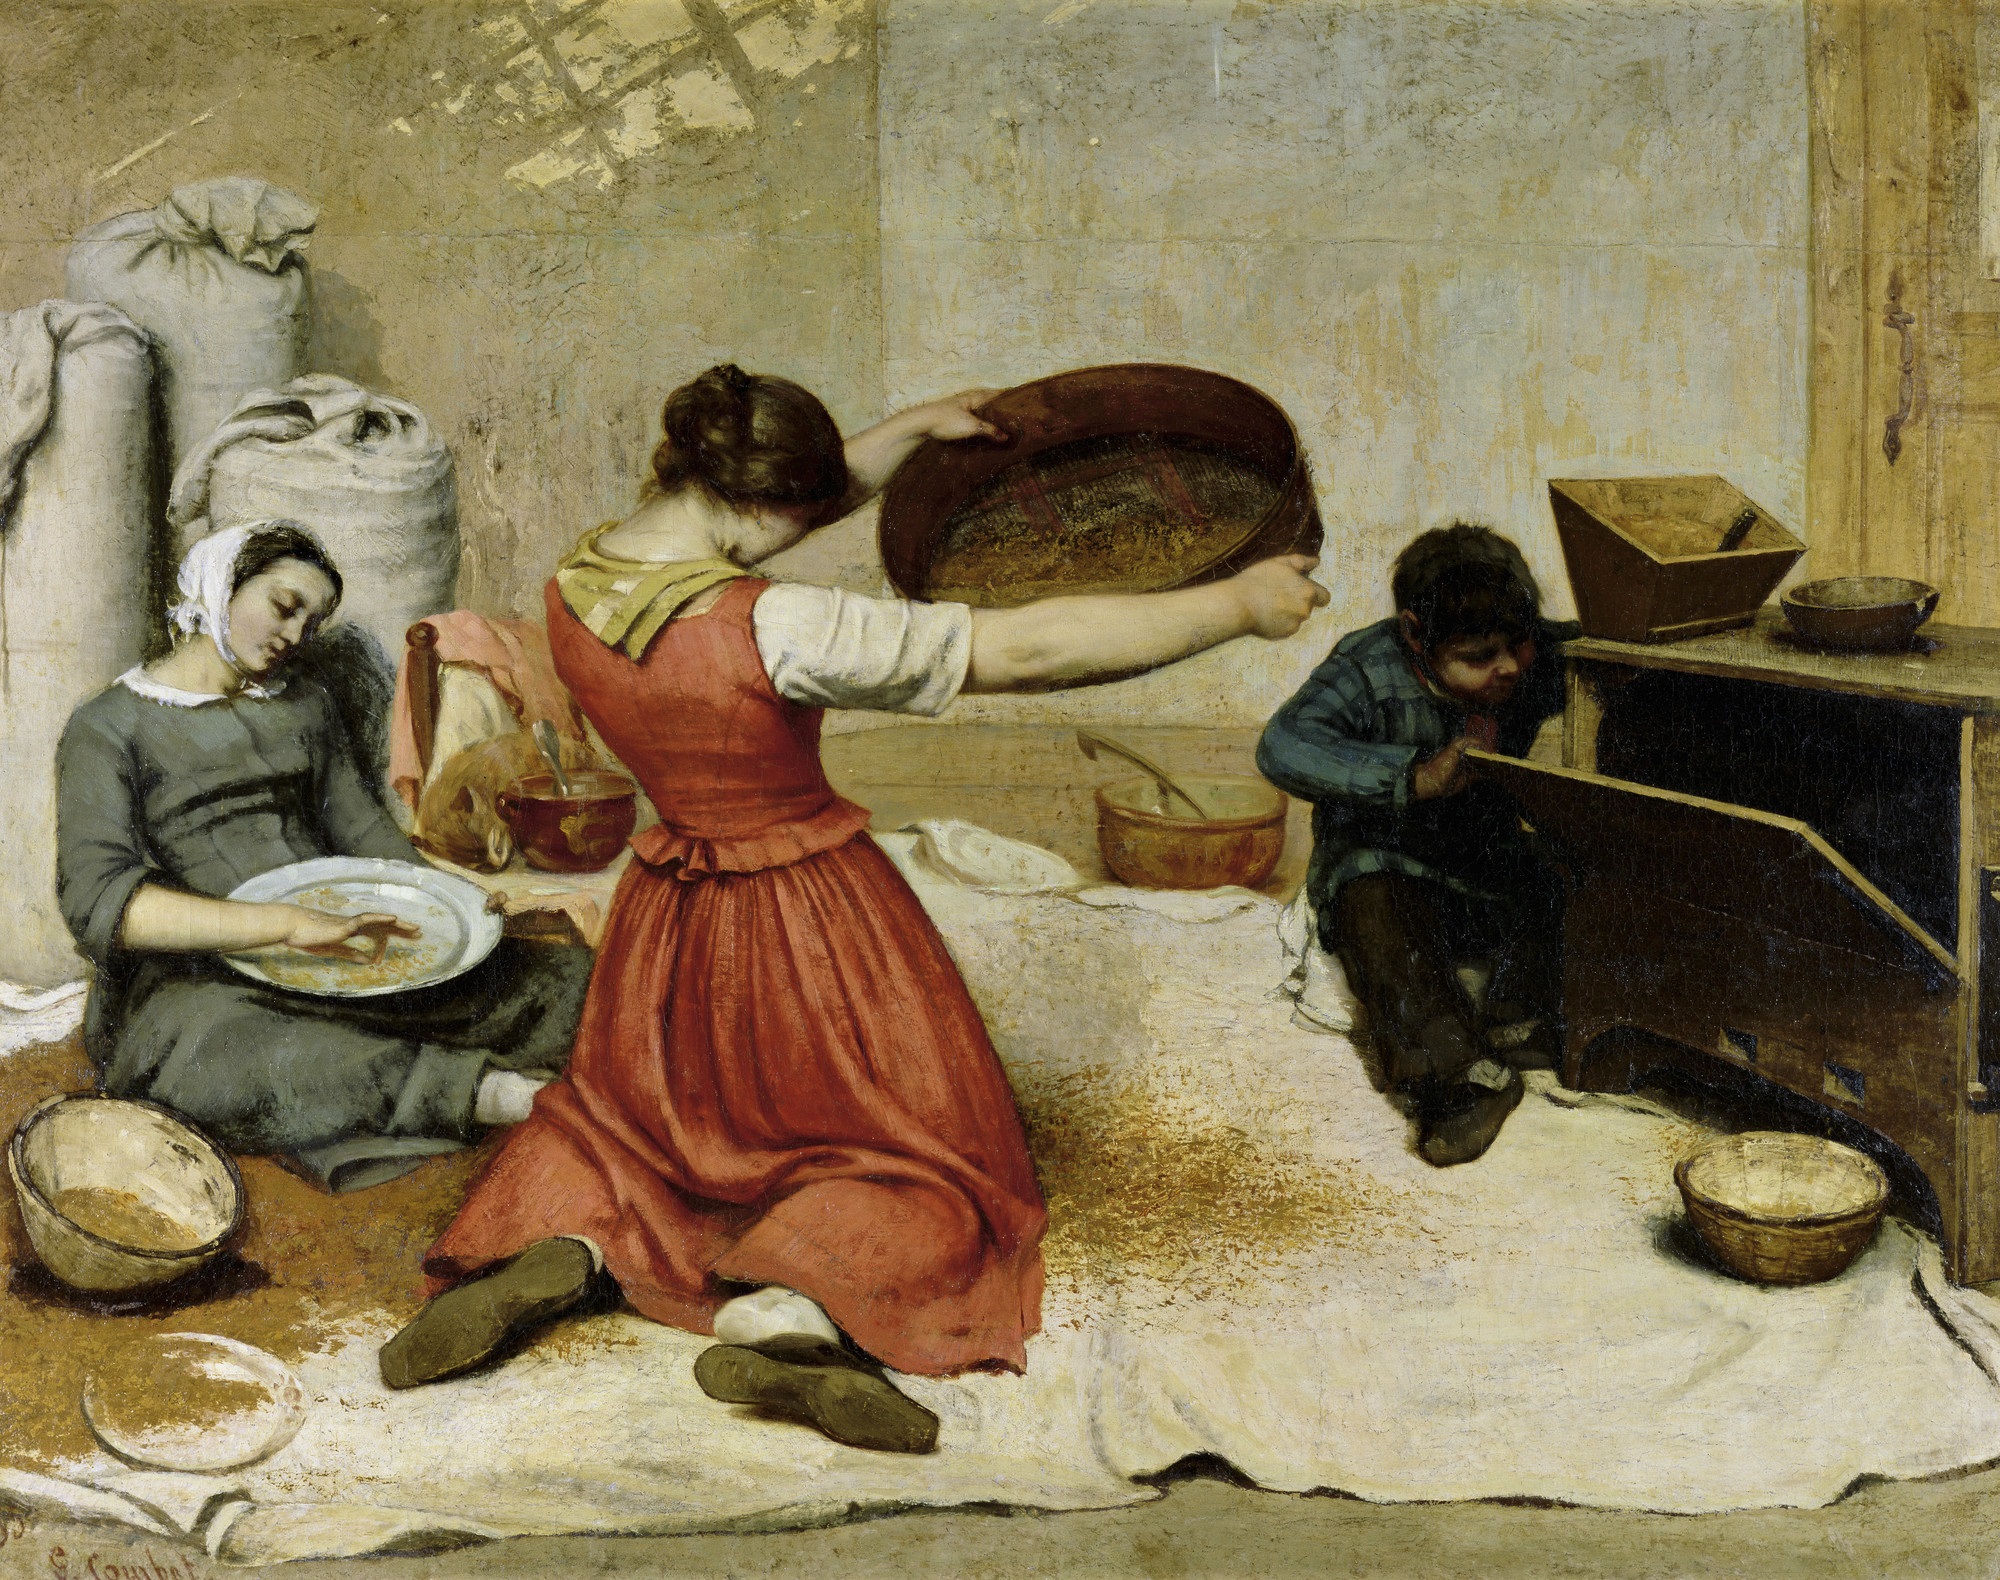 Gustave Courbet 014.jpg